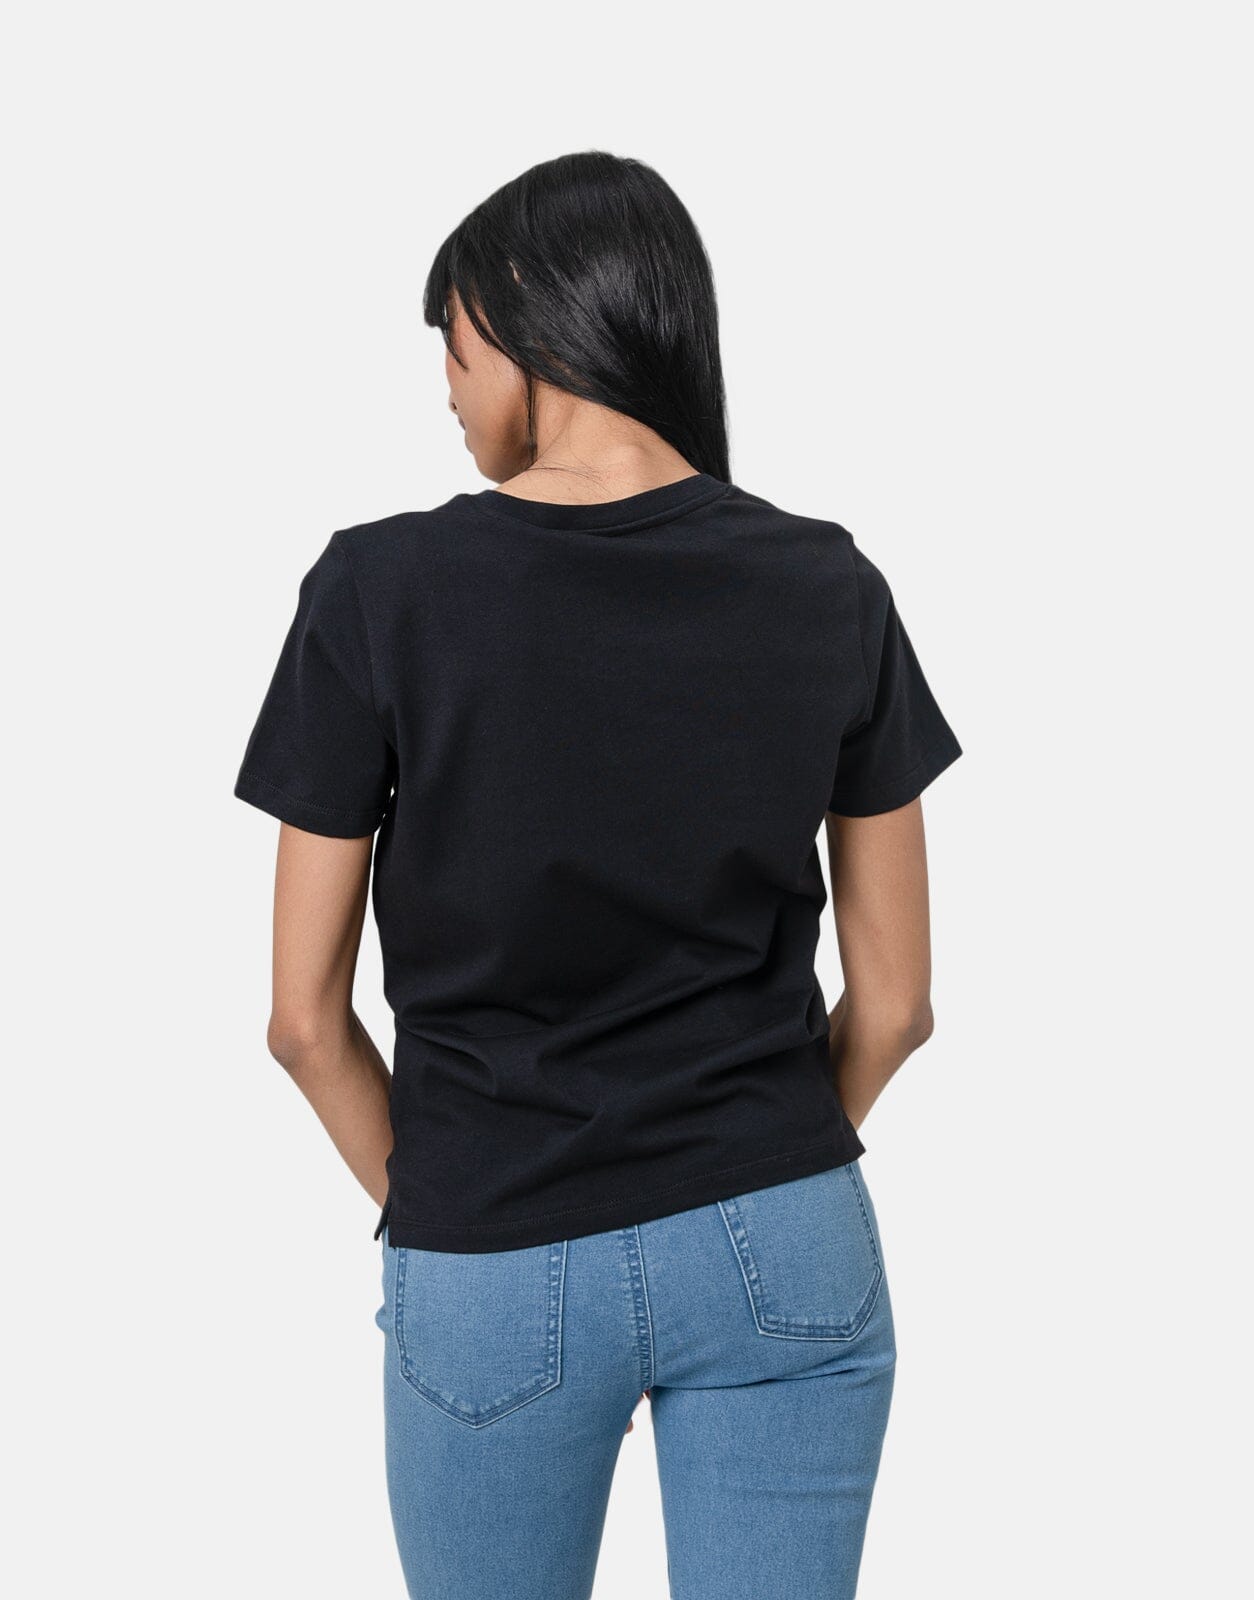 Guess Shaded Logo Black T-Shirt - Subwear